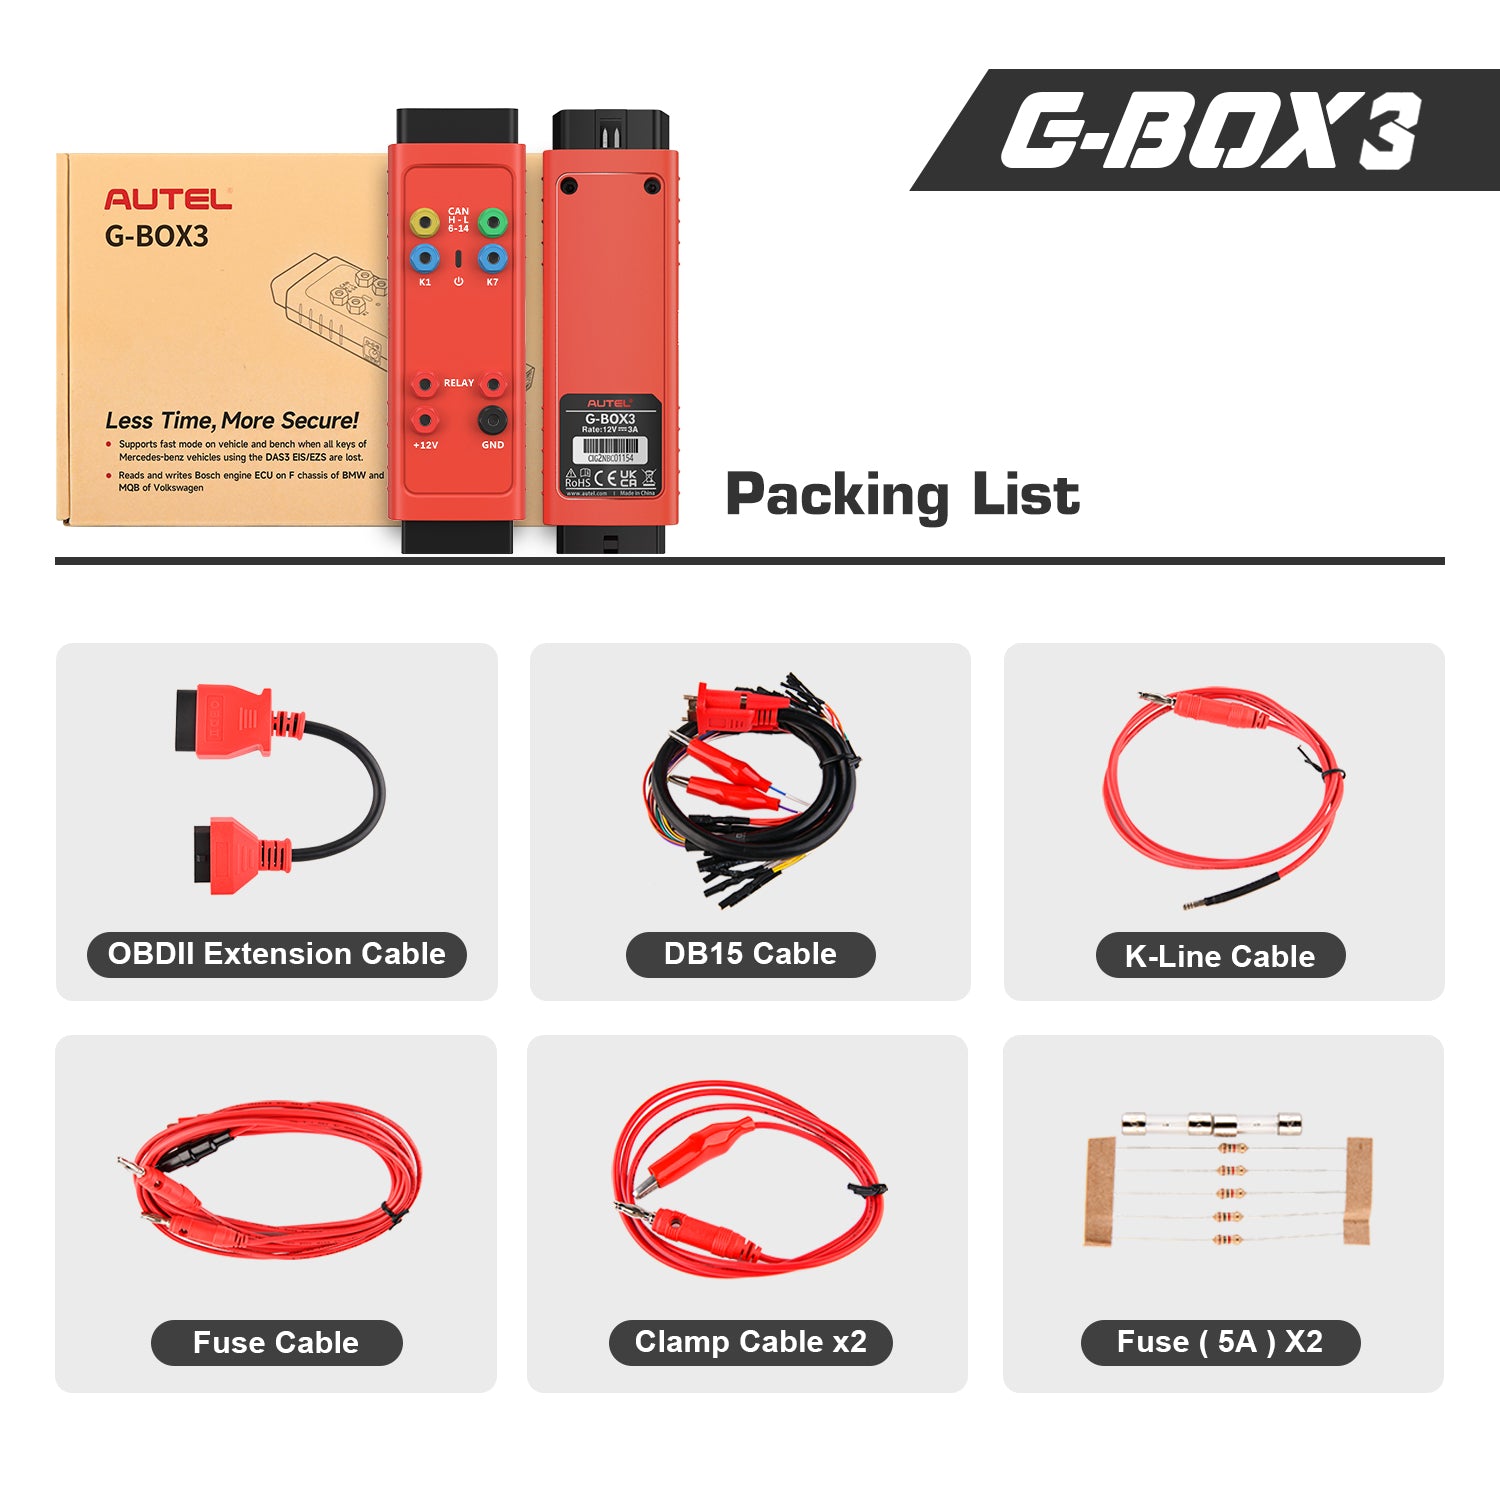 G-BOX3 Packing list